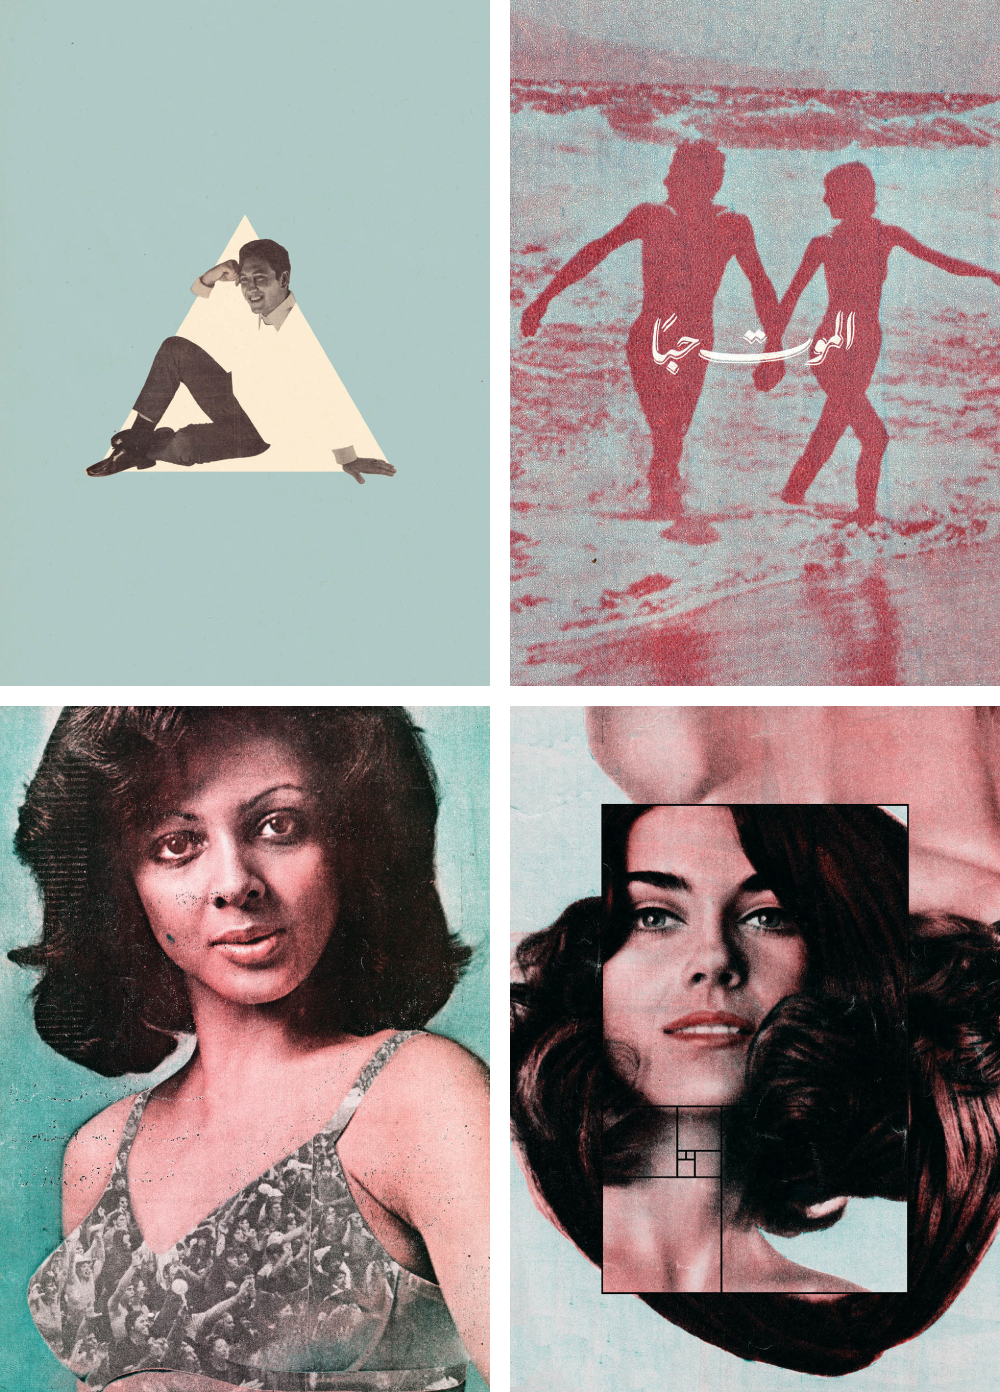 Arsheef Archive collage vintage old newspaper magazine sex Arab culture Pop Art 70s 60s revolution warsheh